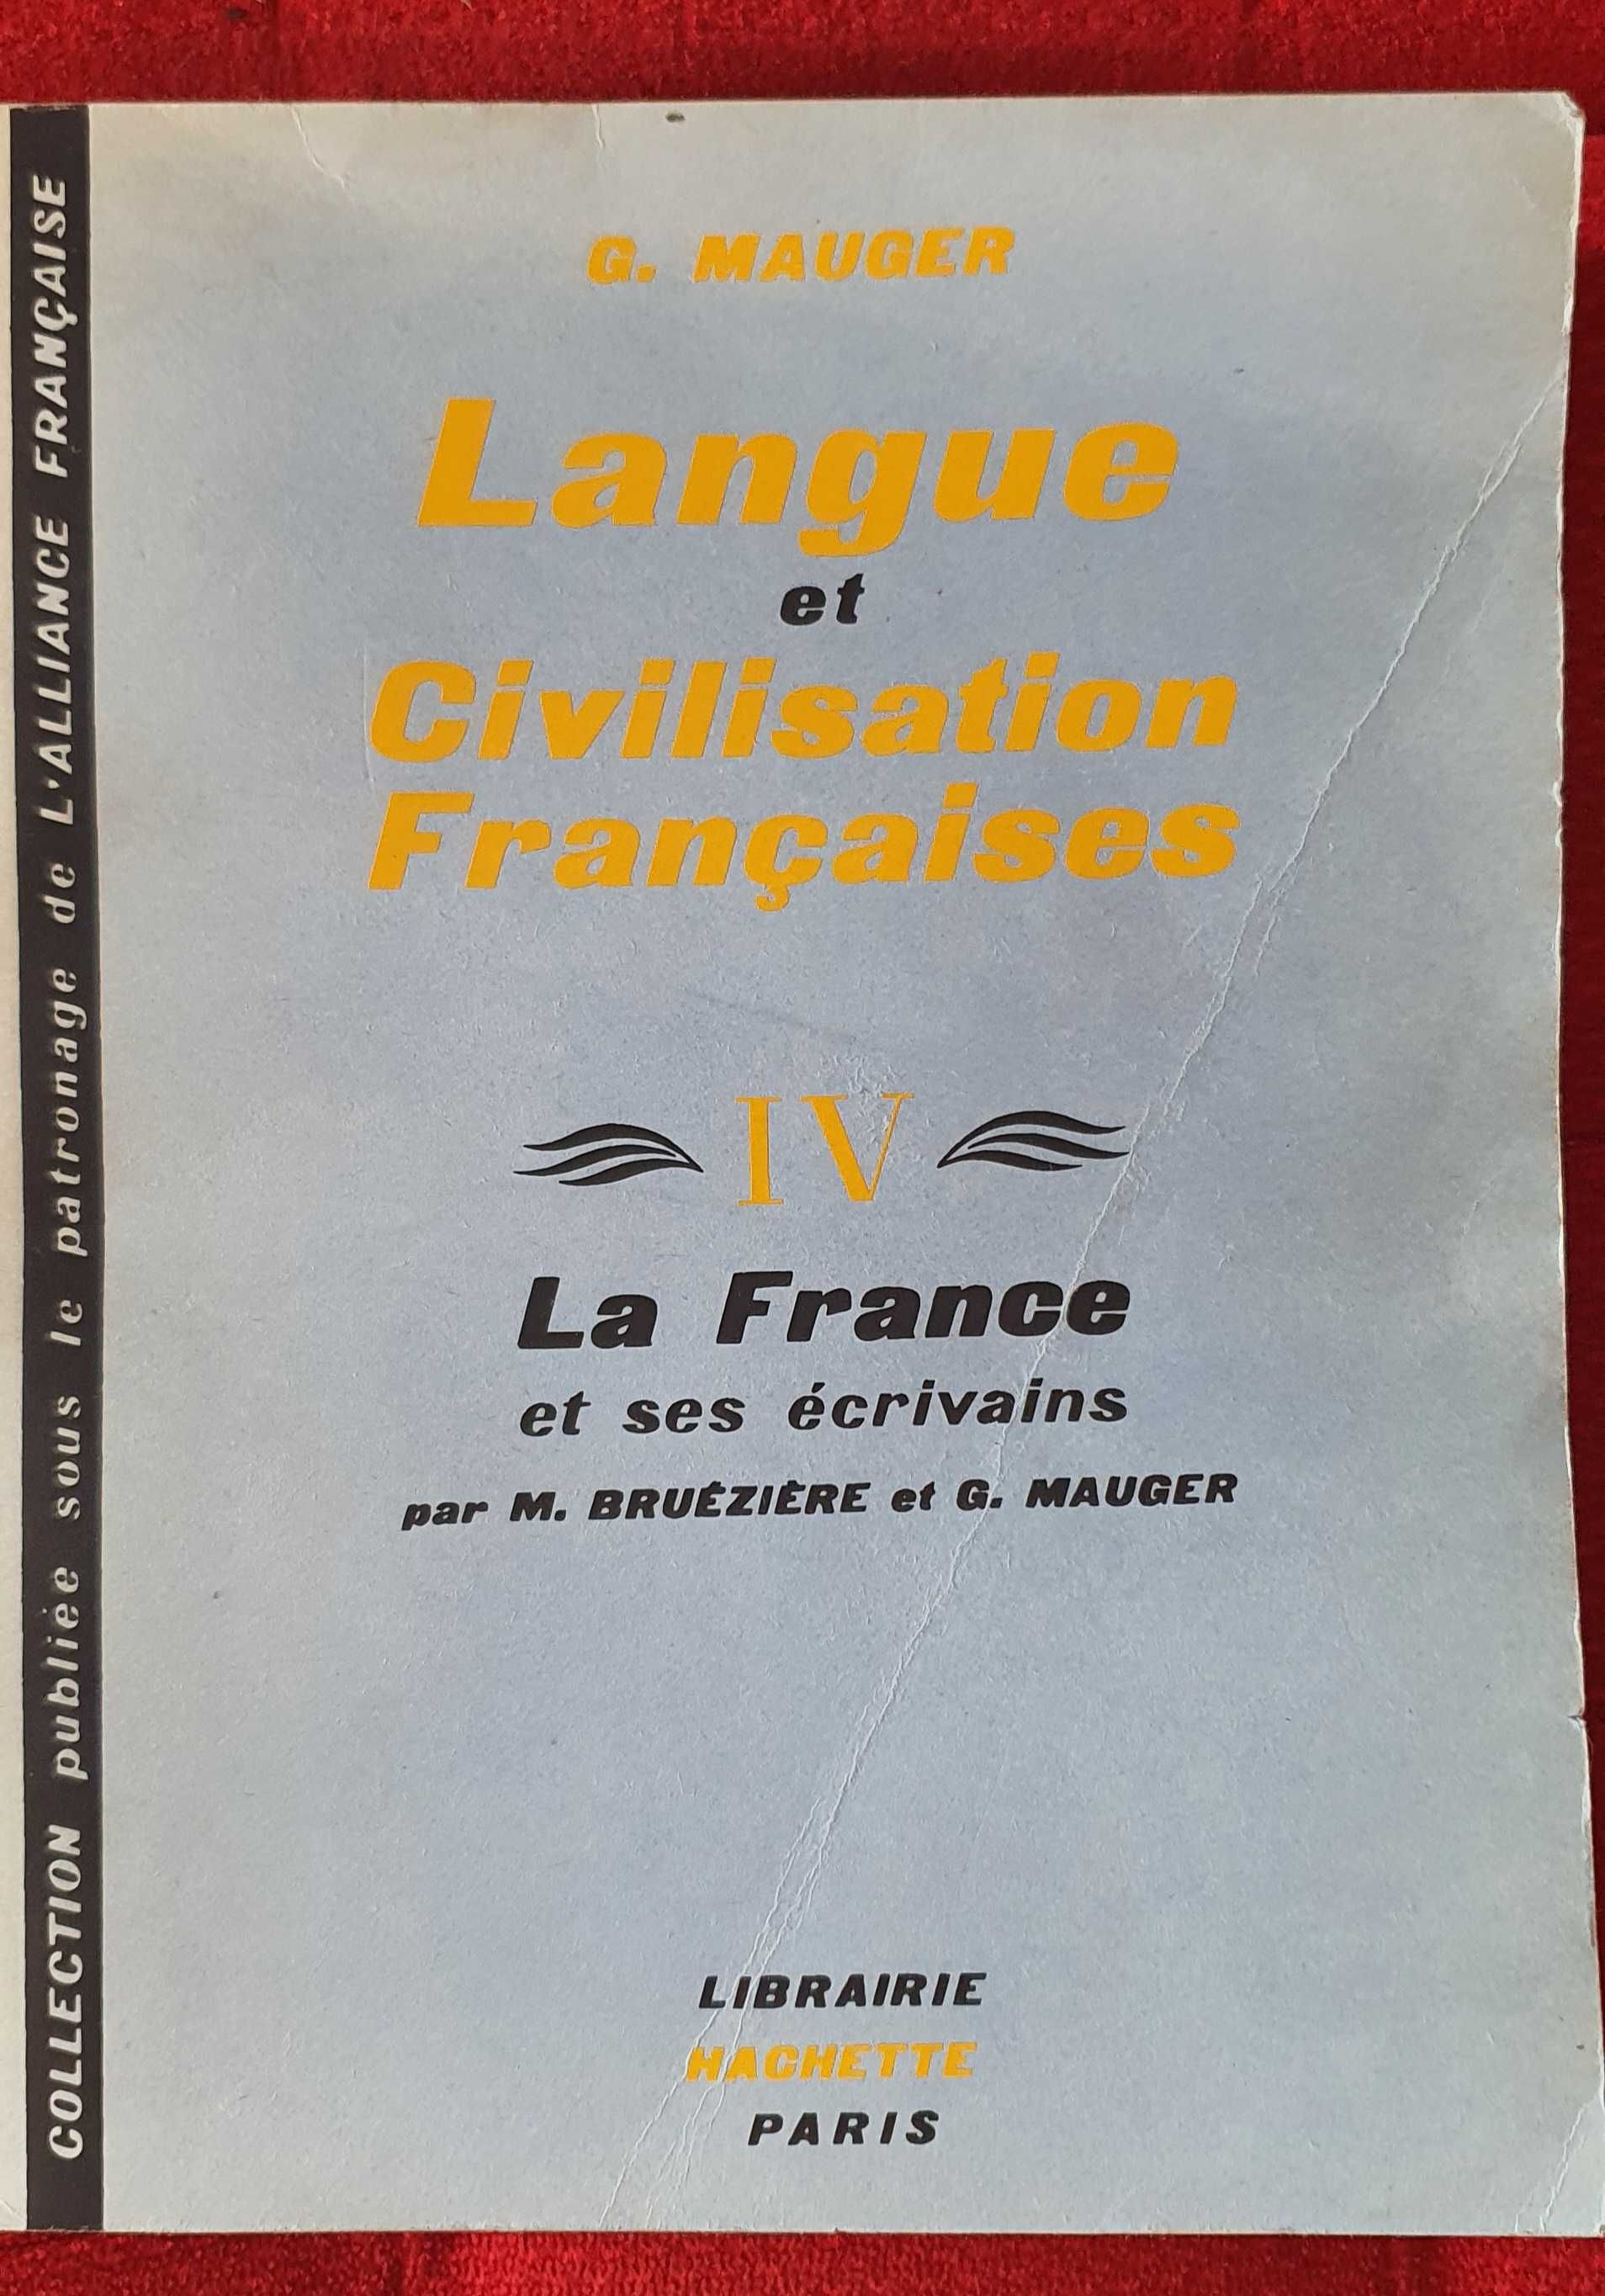 Curs de Limba si Civilizatie Franceza (4 volume)